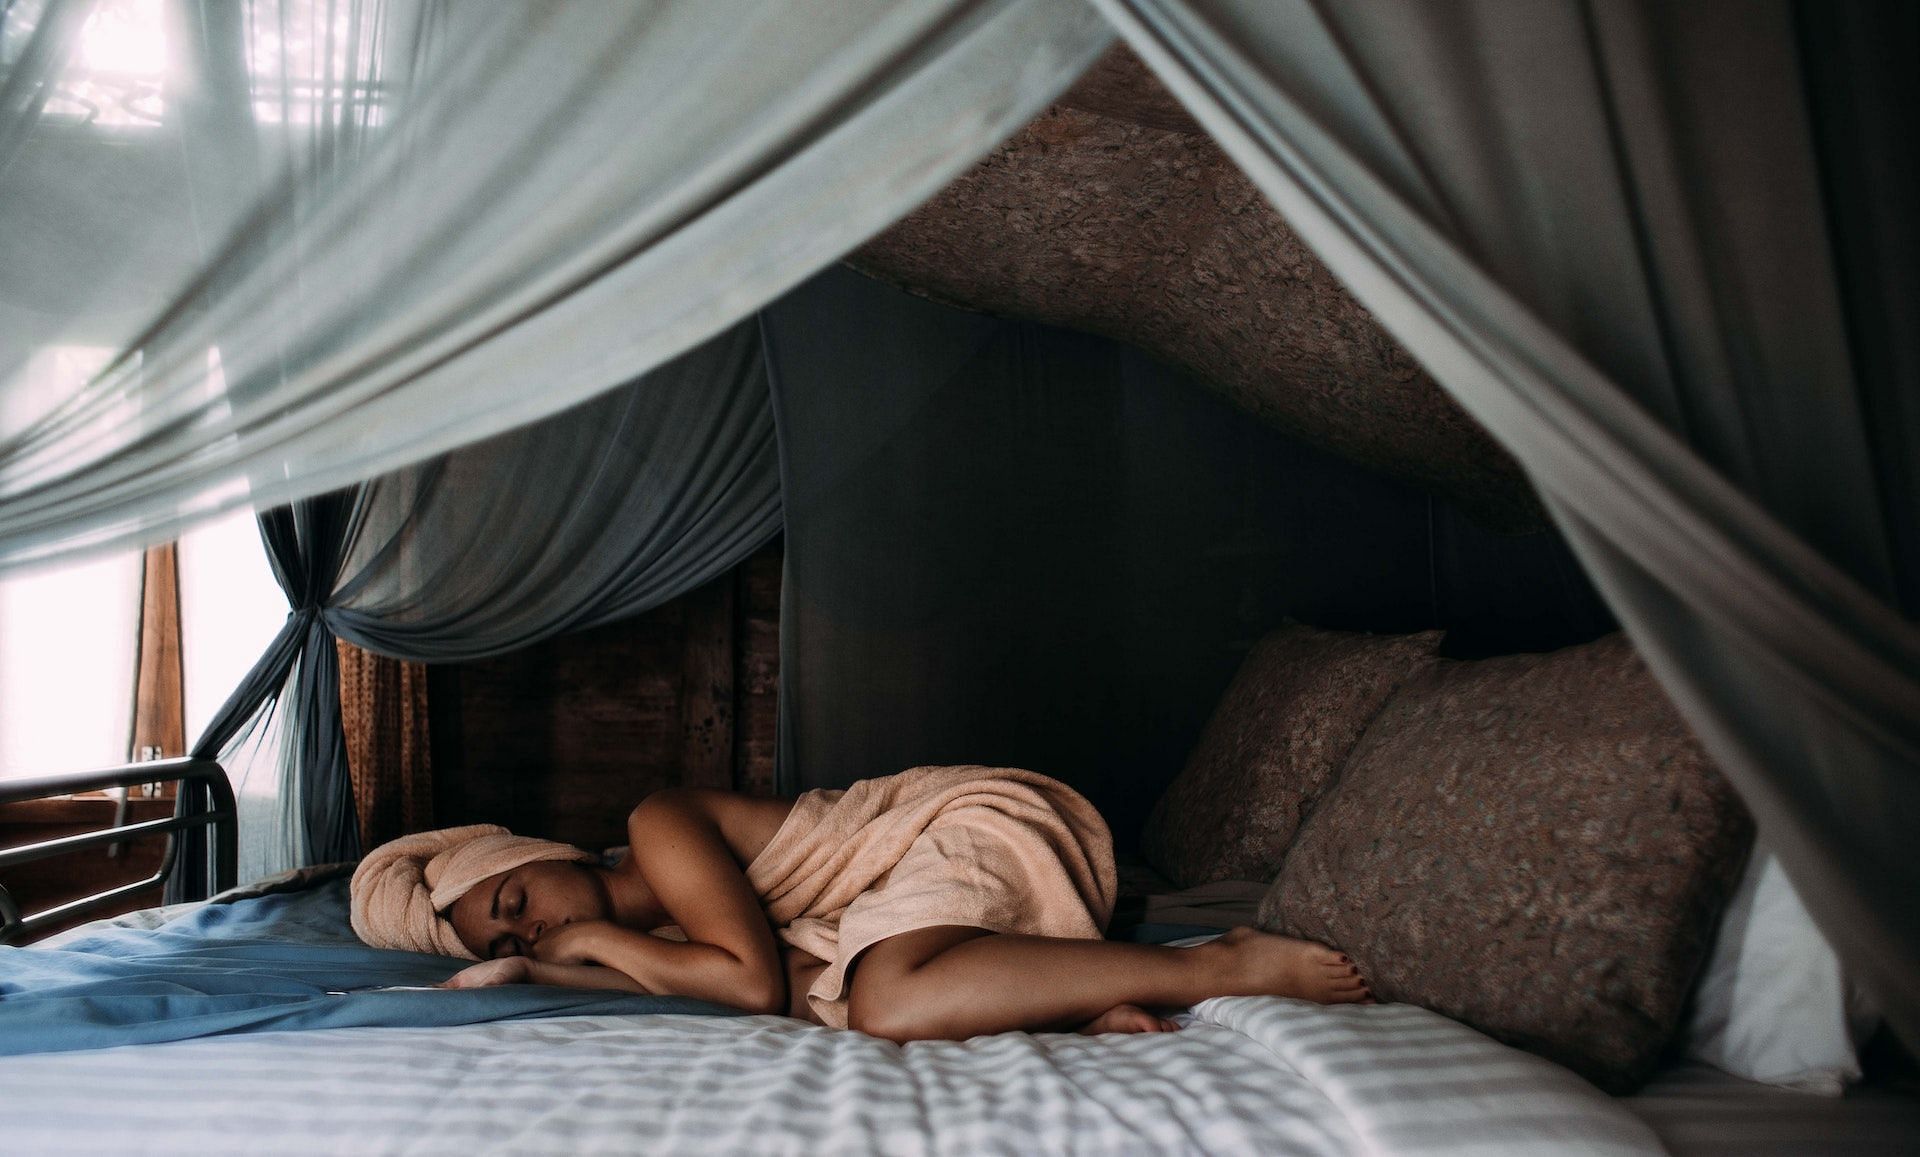 Ashwagandha benefits for women include improving sleep quality. (Photo via Pexels/Rachel Claire)